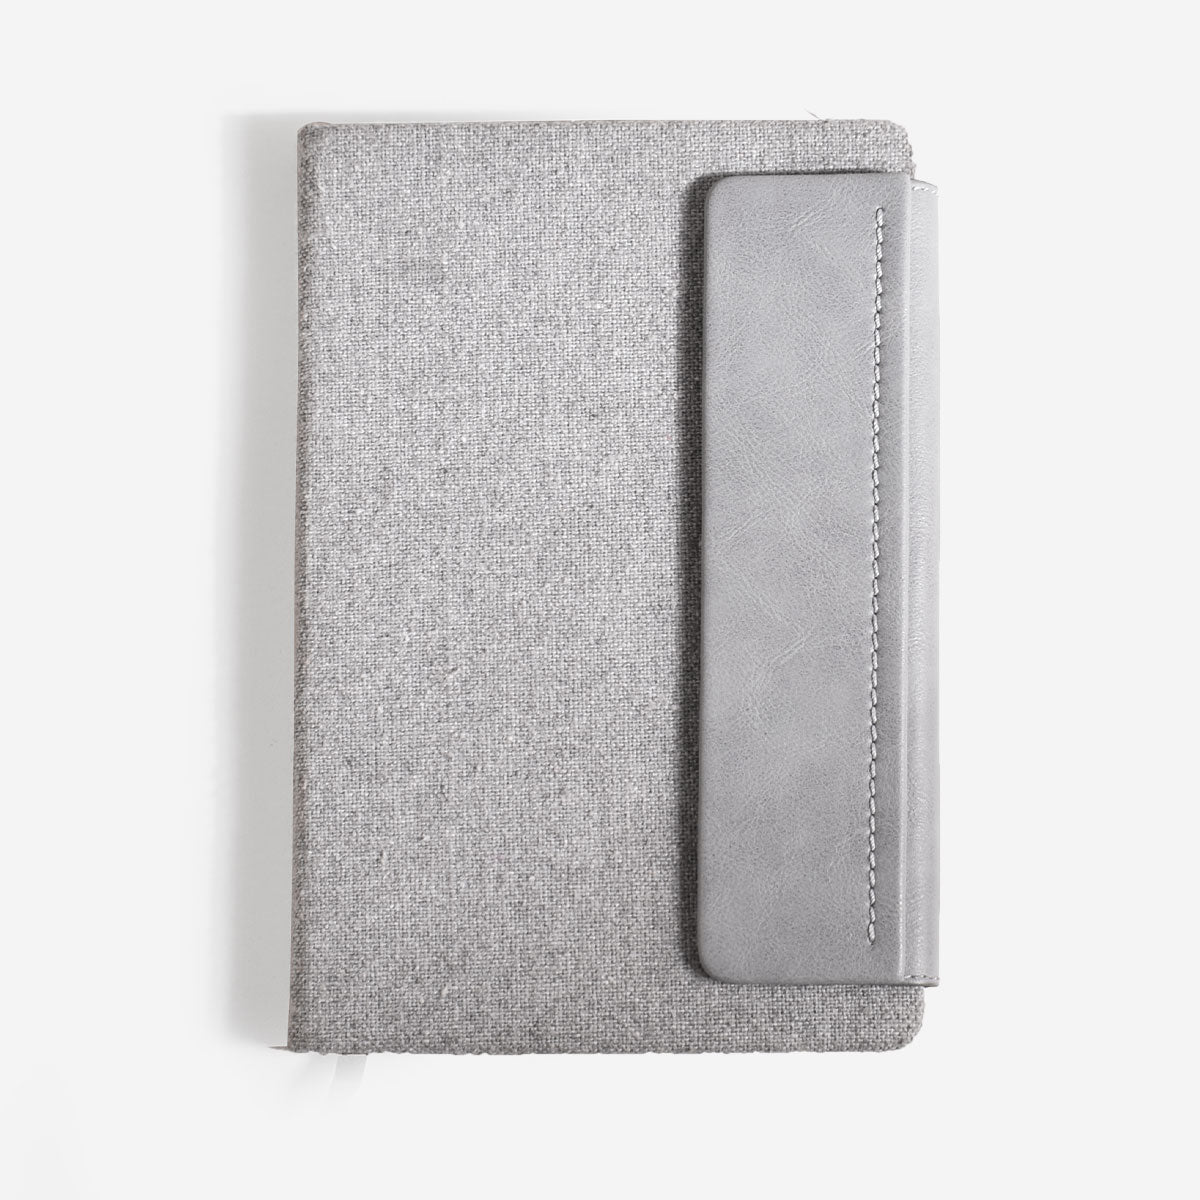 Grey Notebook